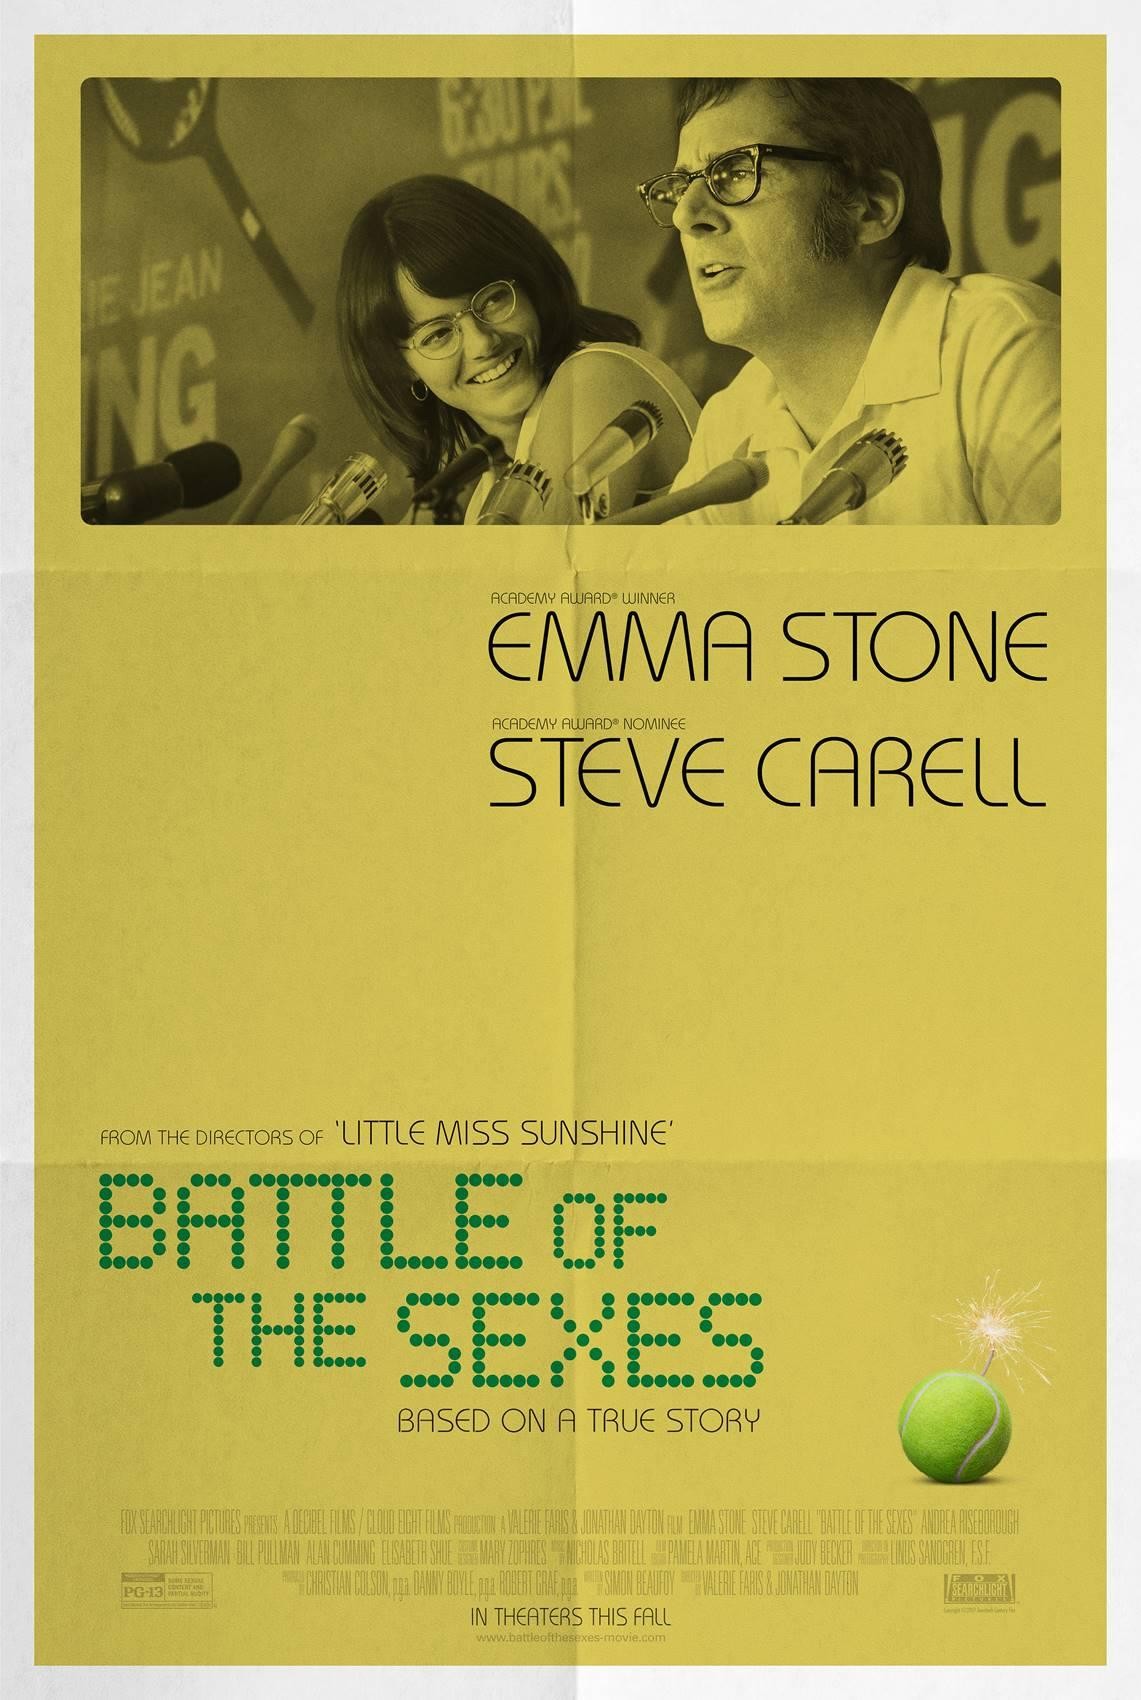 Emma Stone scores as Billie Jean King in 'Battle of the Sexes